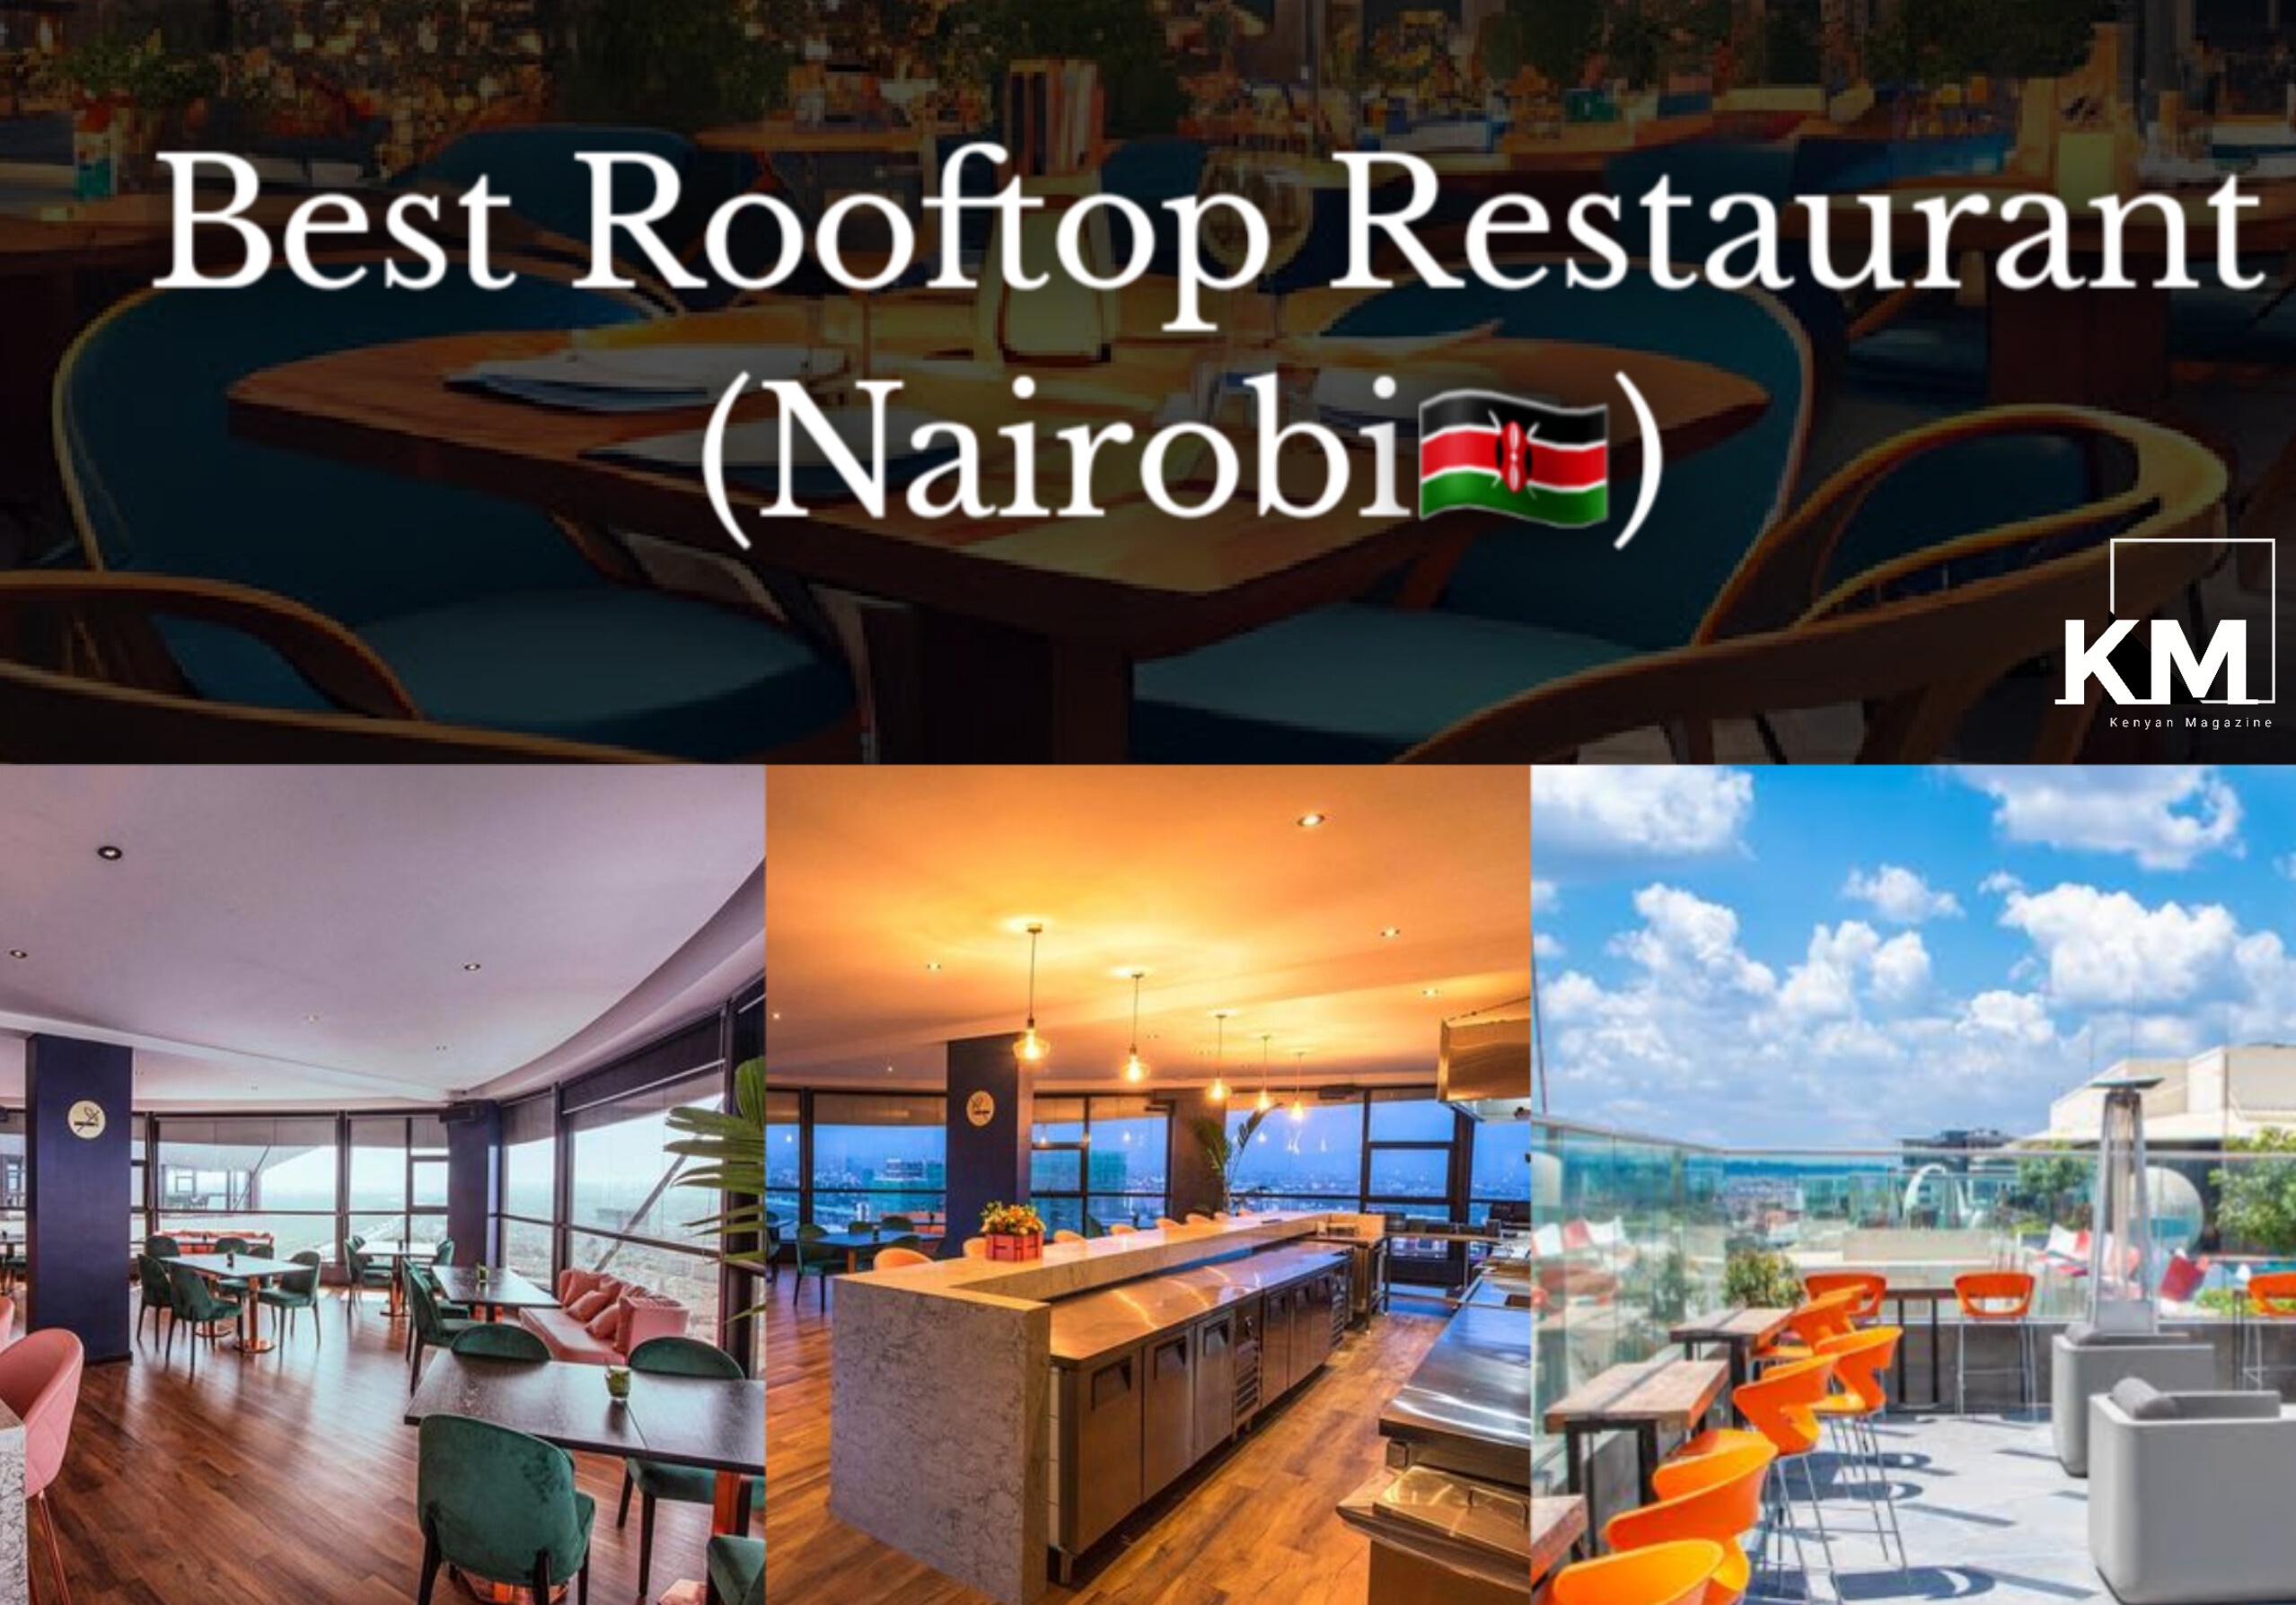 Rooftop restaurant in nairobi Kenya